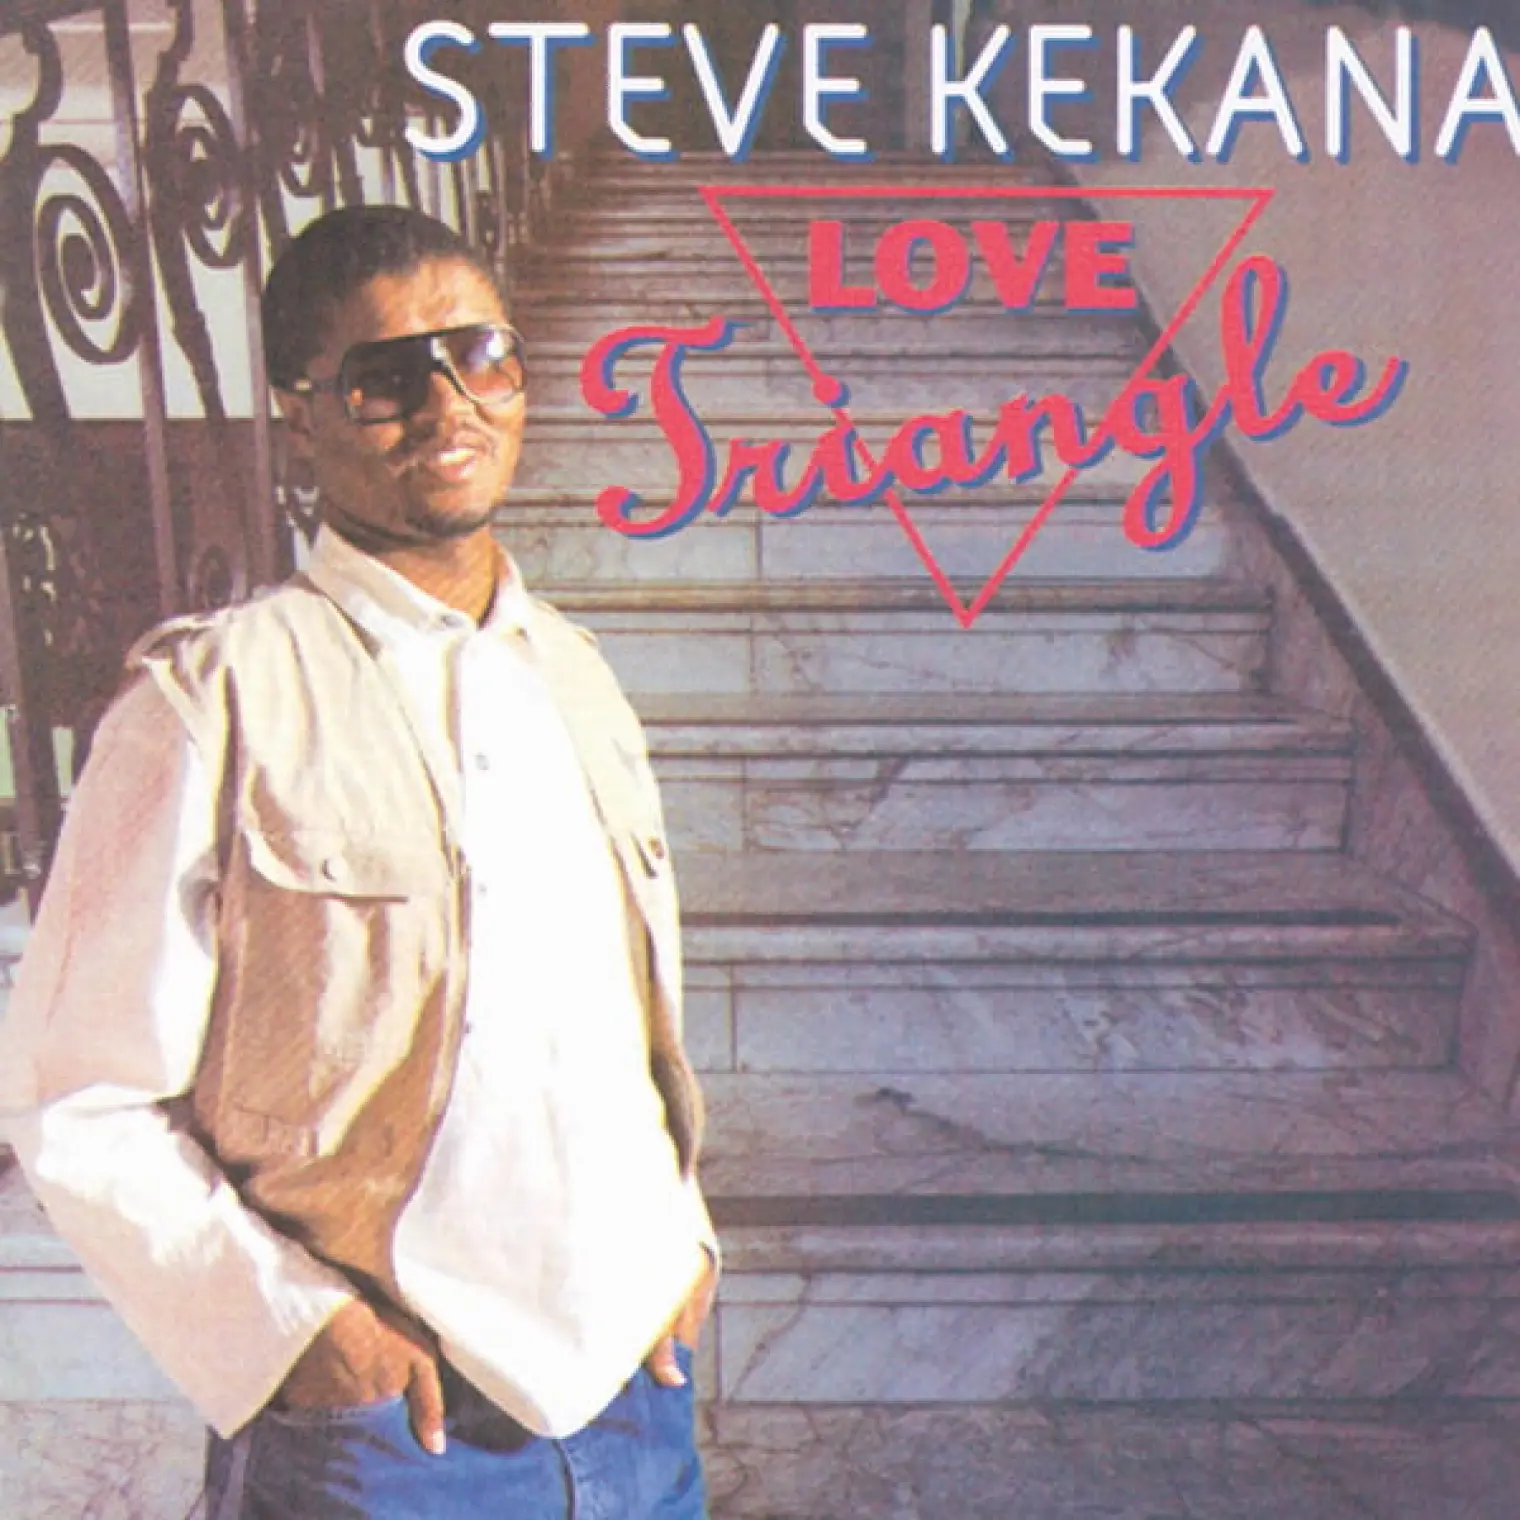 Love Triangle -  Steve Kekana 